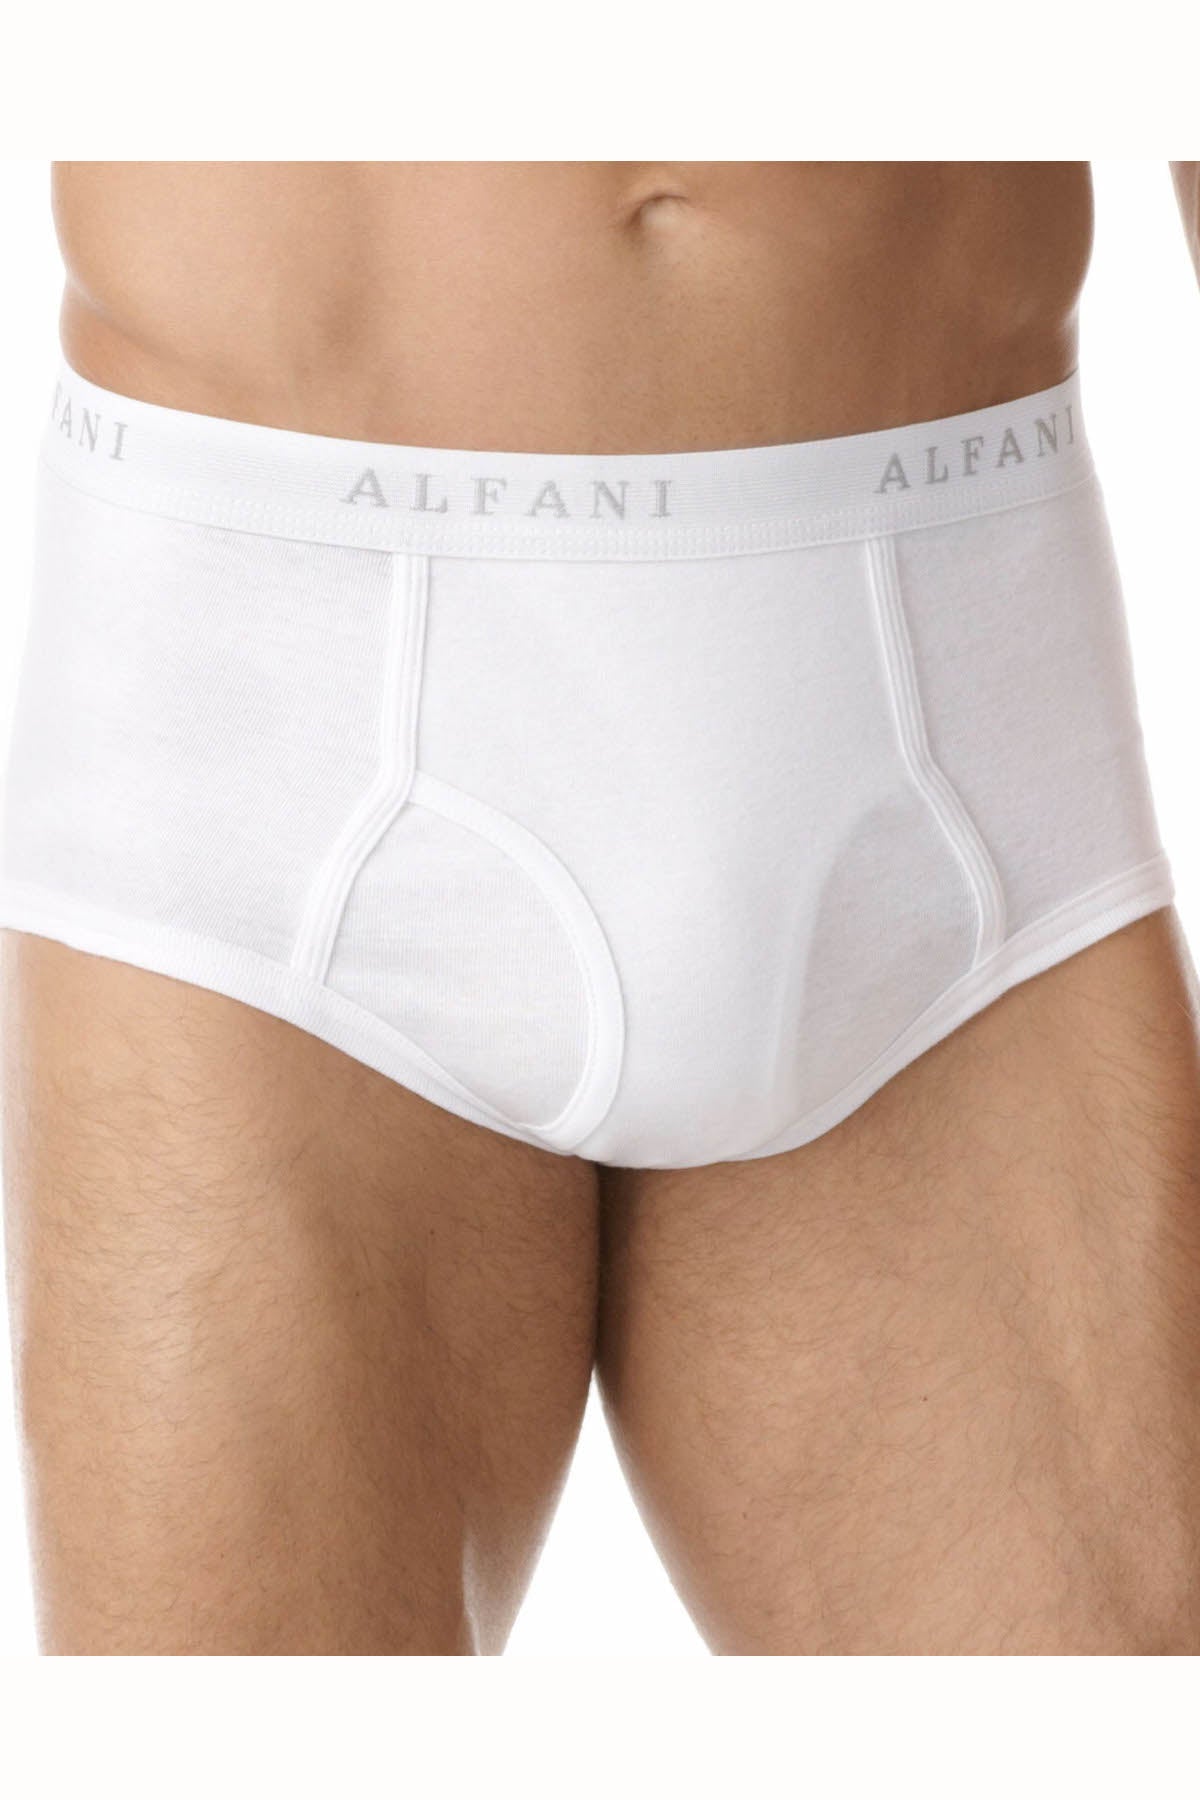 Alfani White Classic Cotton Brief 4-Pack